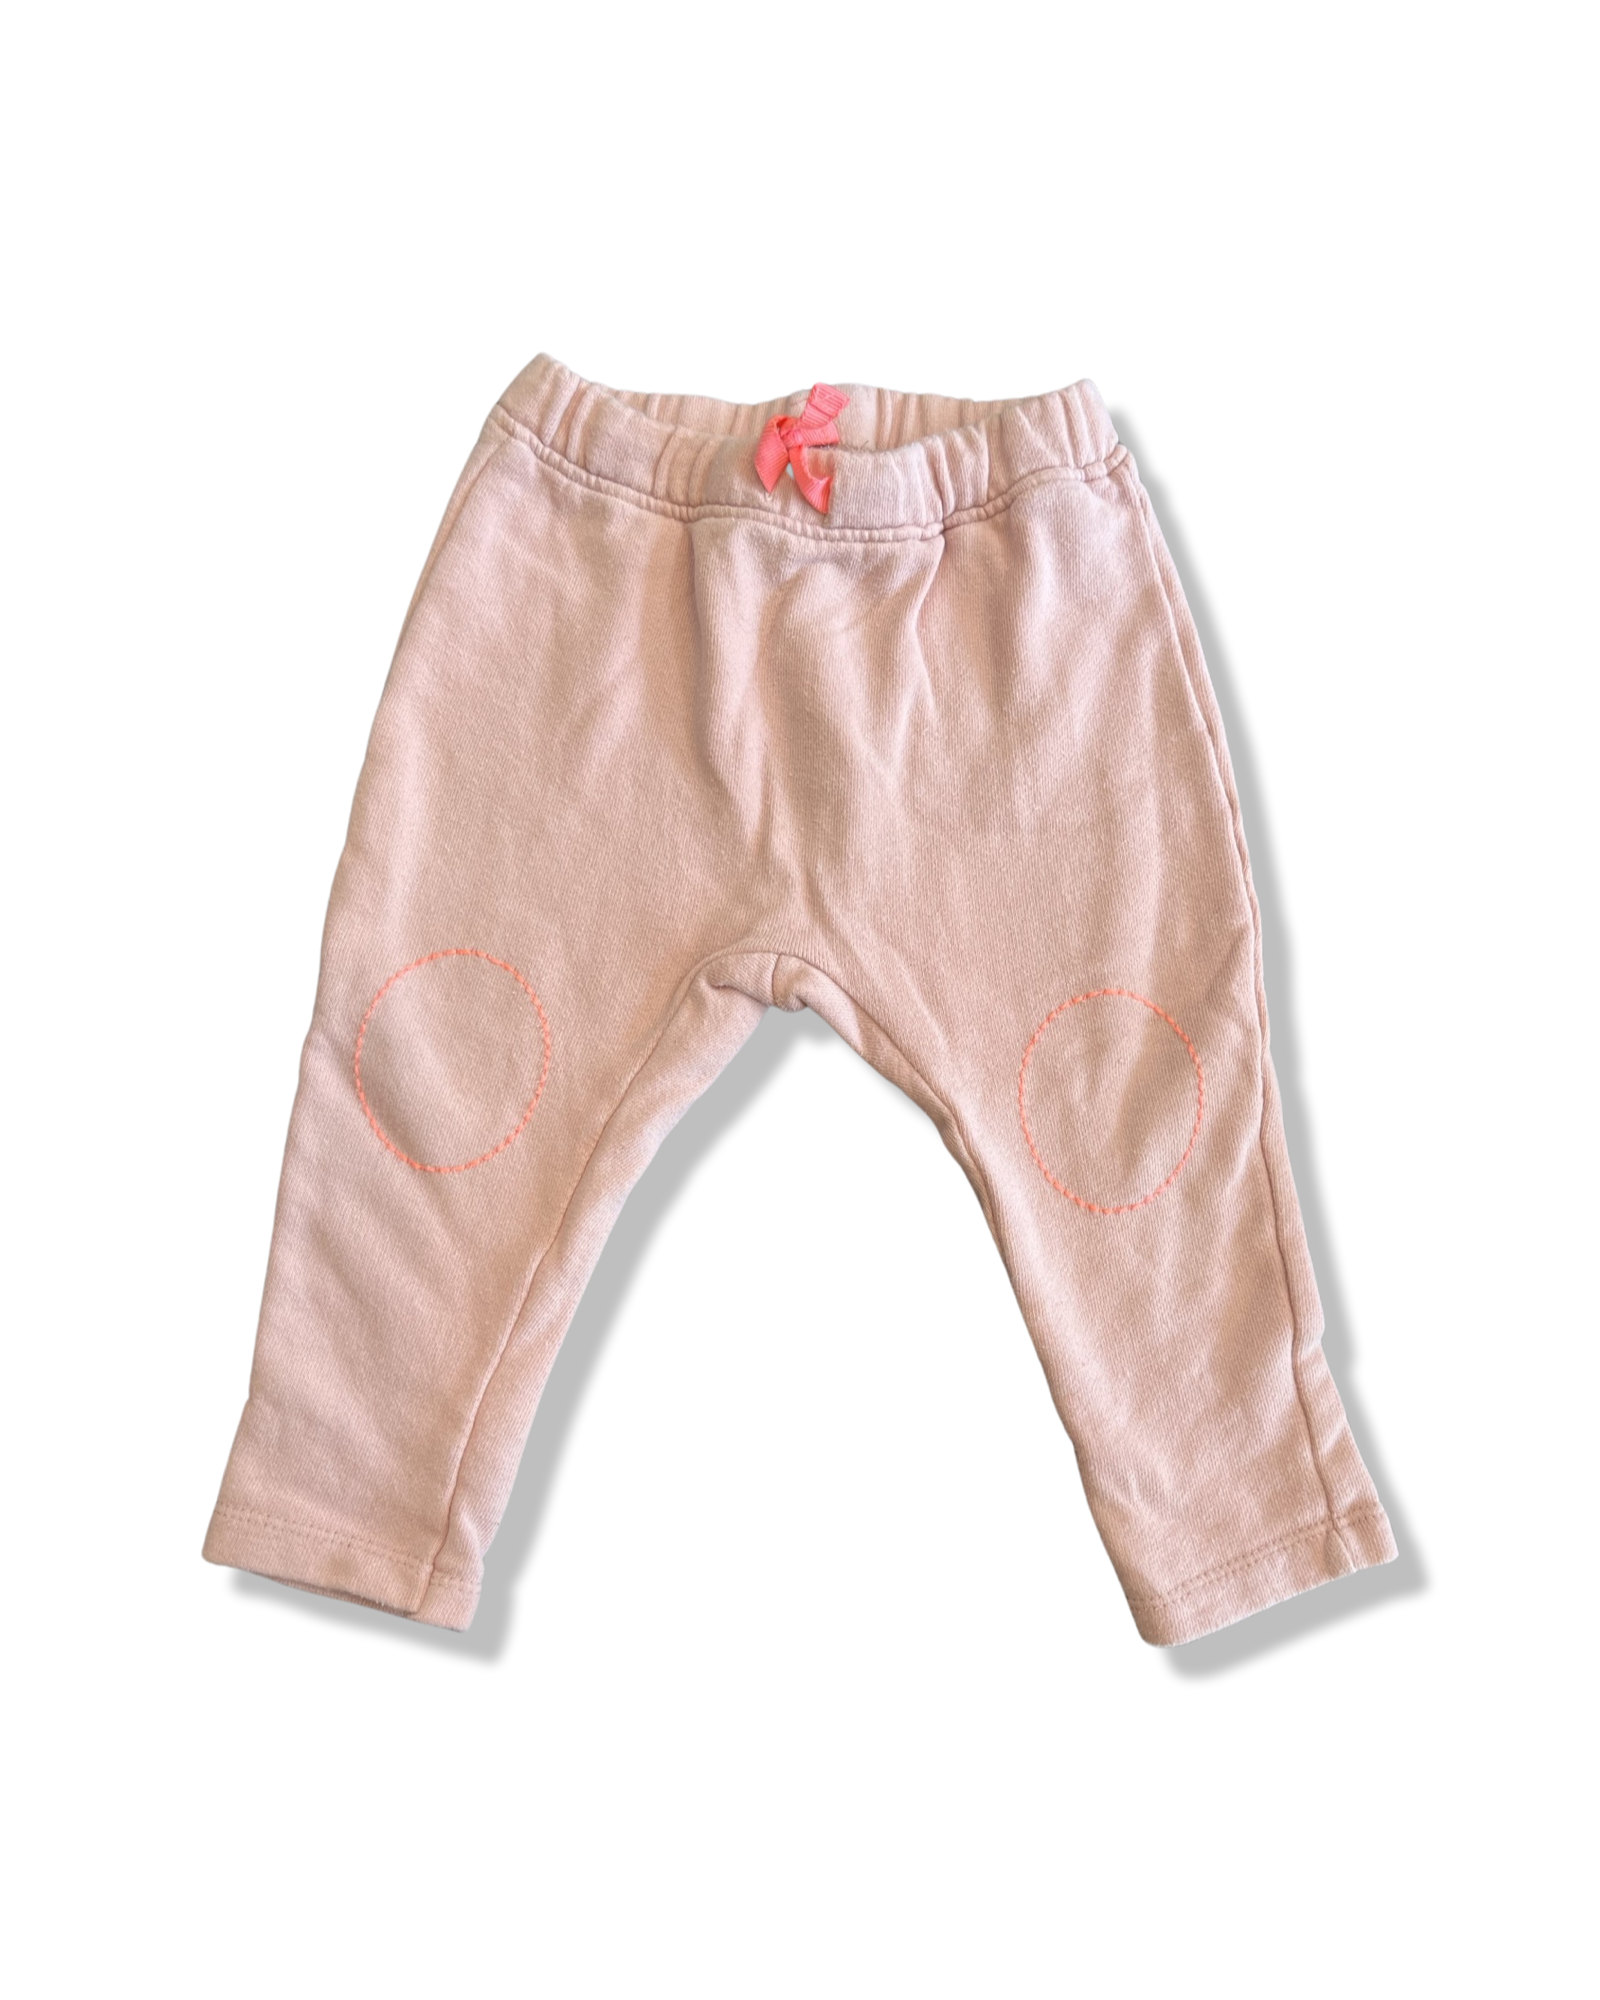 Zara Pink Track Pants (12-18M)